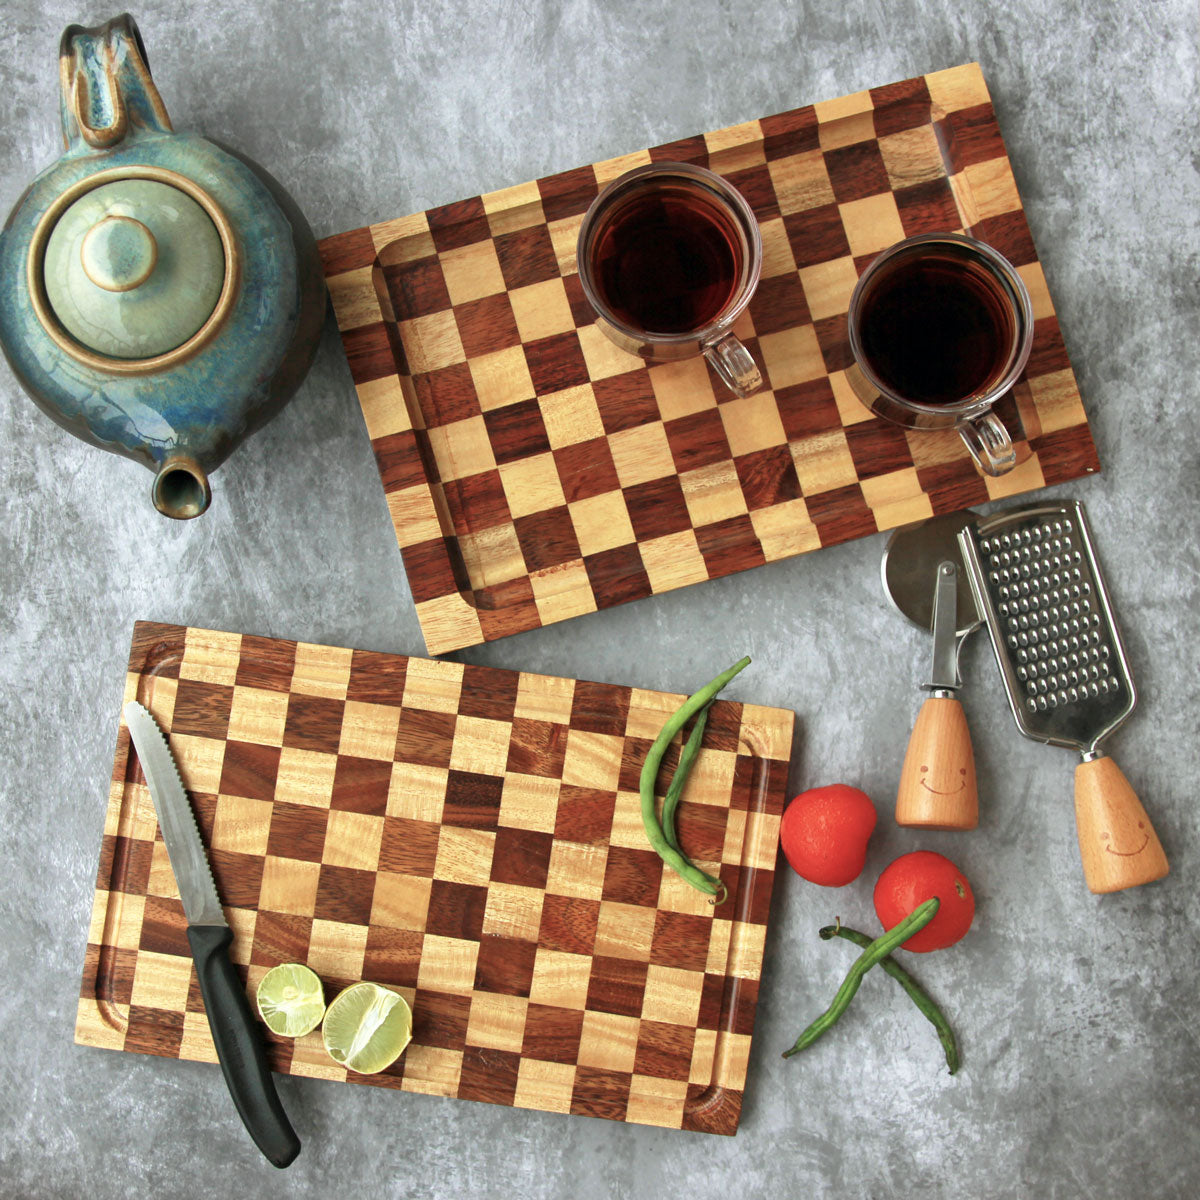 Chessboard Design Wood Tray & Chopping Board: Set of 2 | Birthday Gift Set